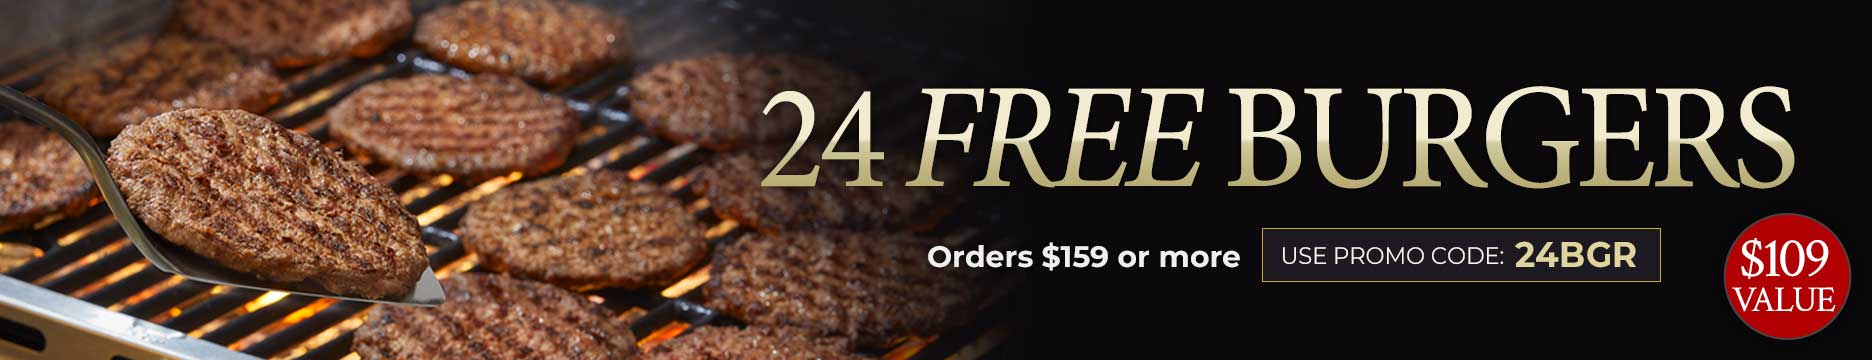 Receive 24 FREE Steak Burgers on you order of $159+. Use Promo code: 24BGR